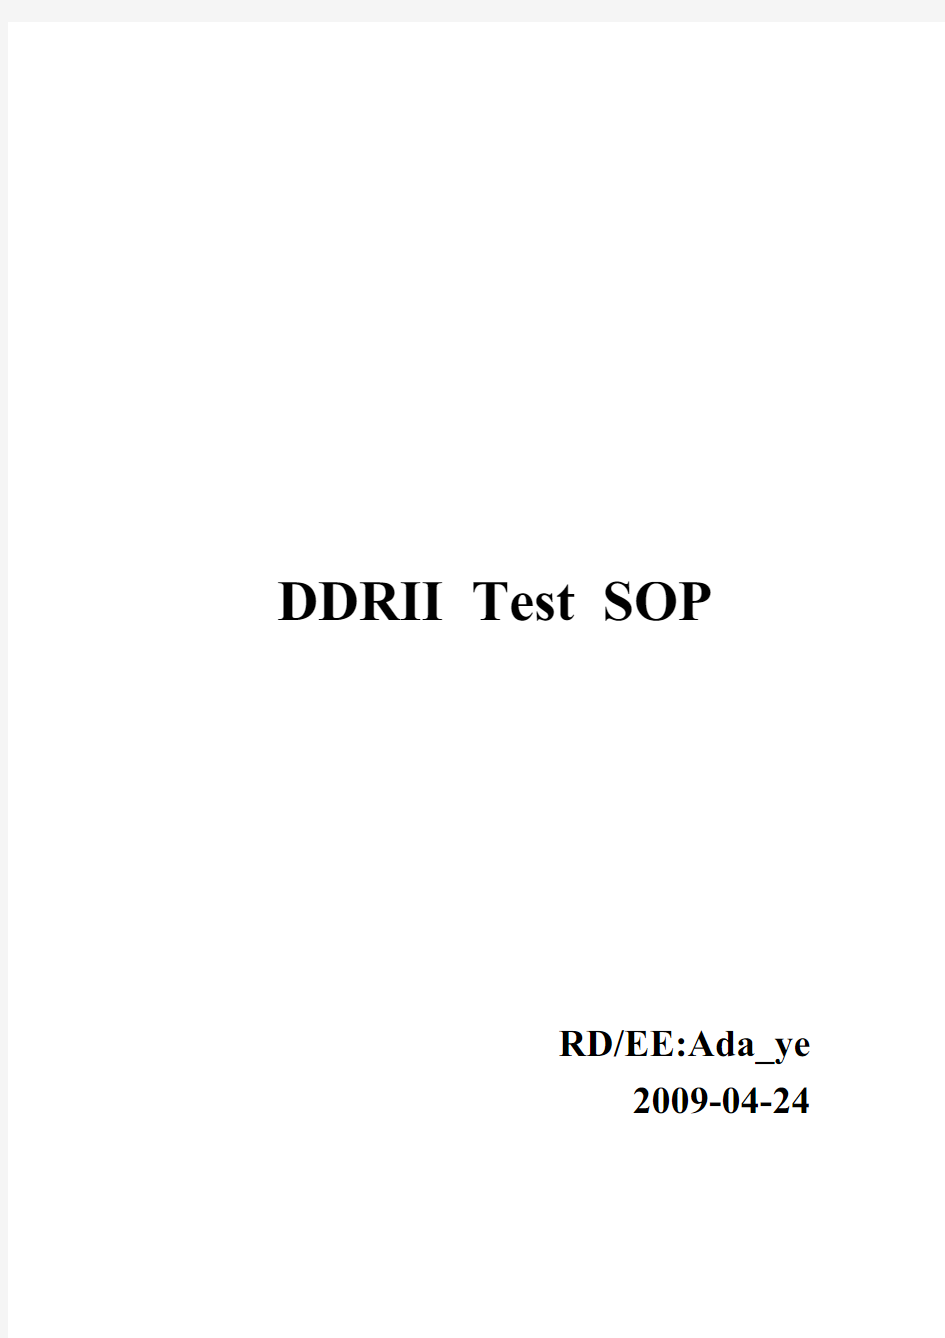 DDRII测试规范 SOP